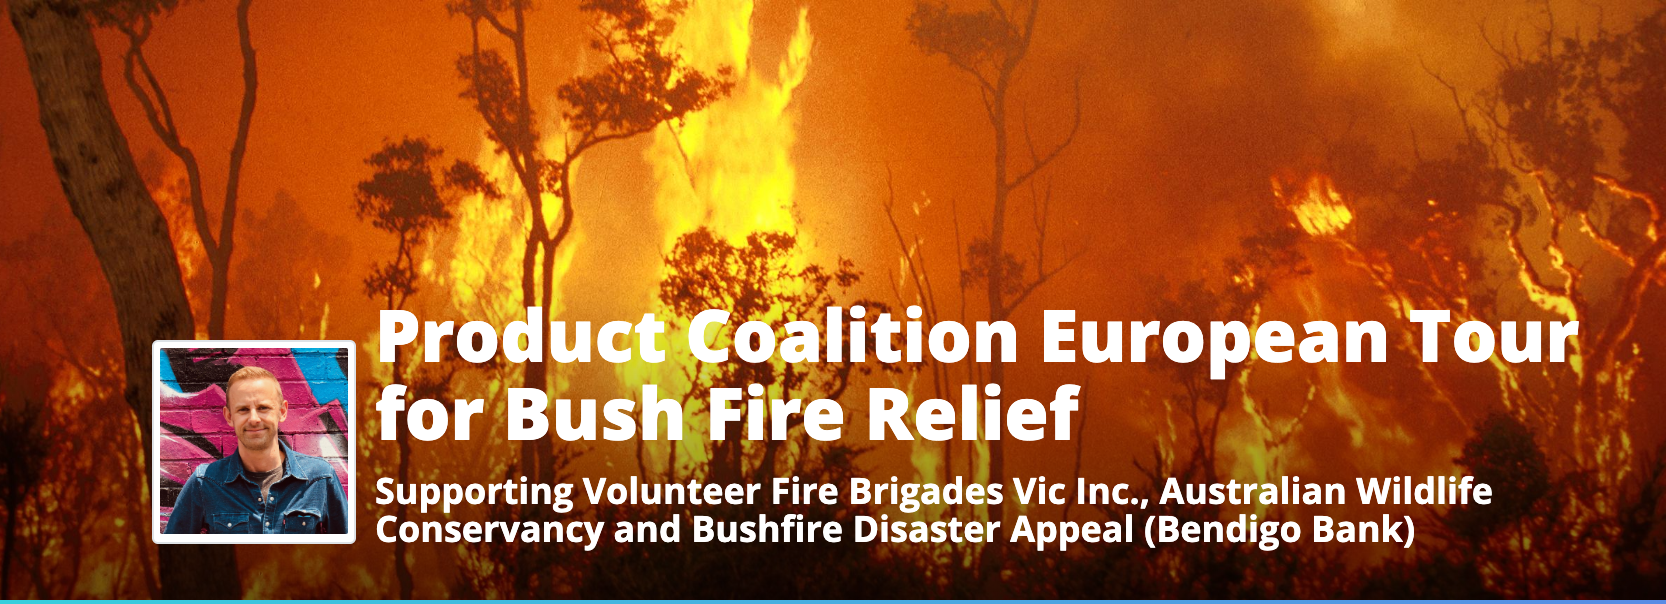 bushfire relief